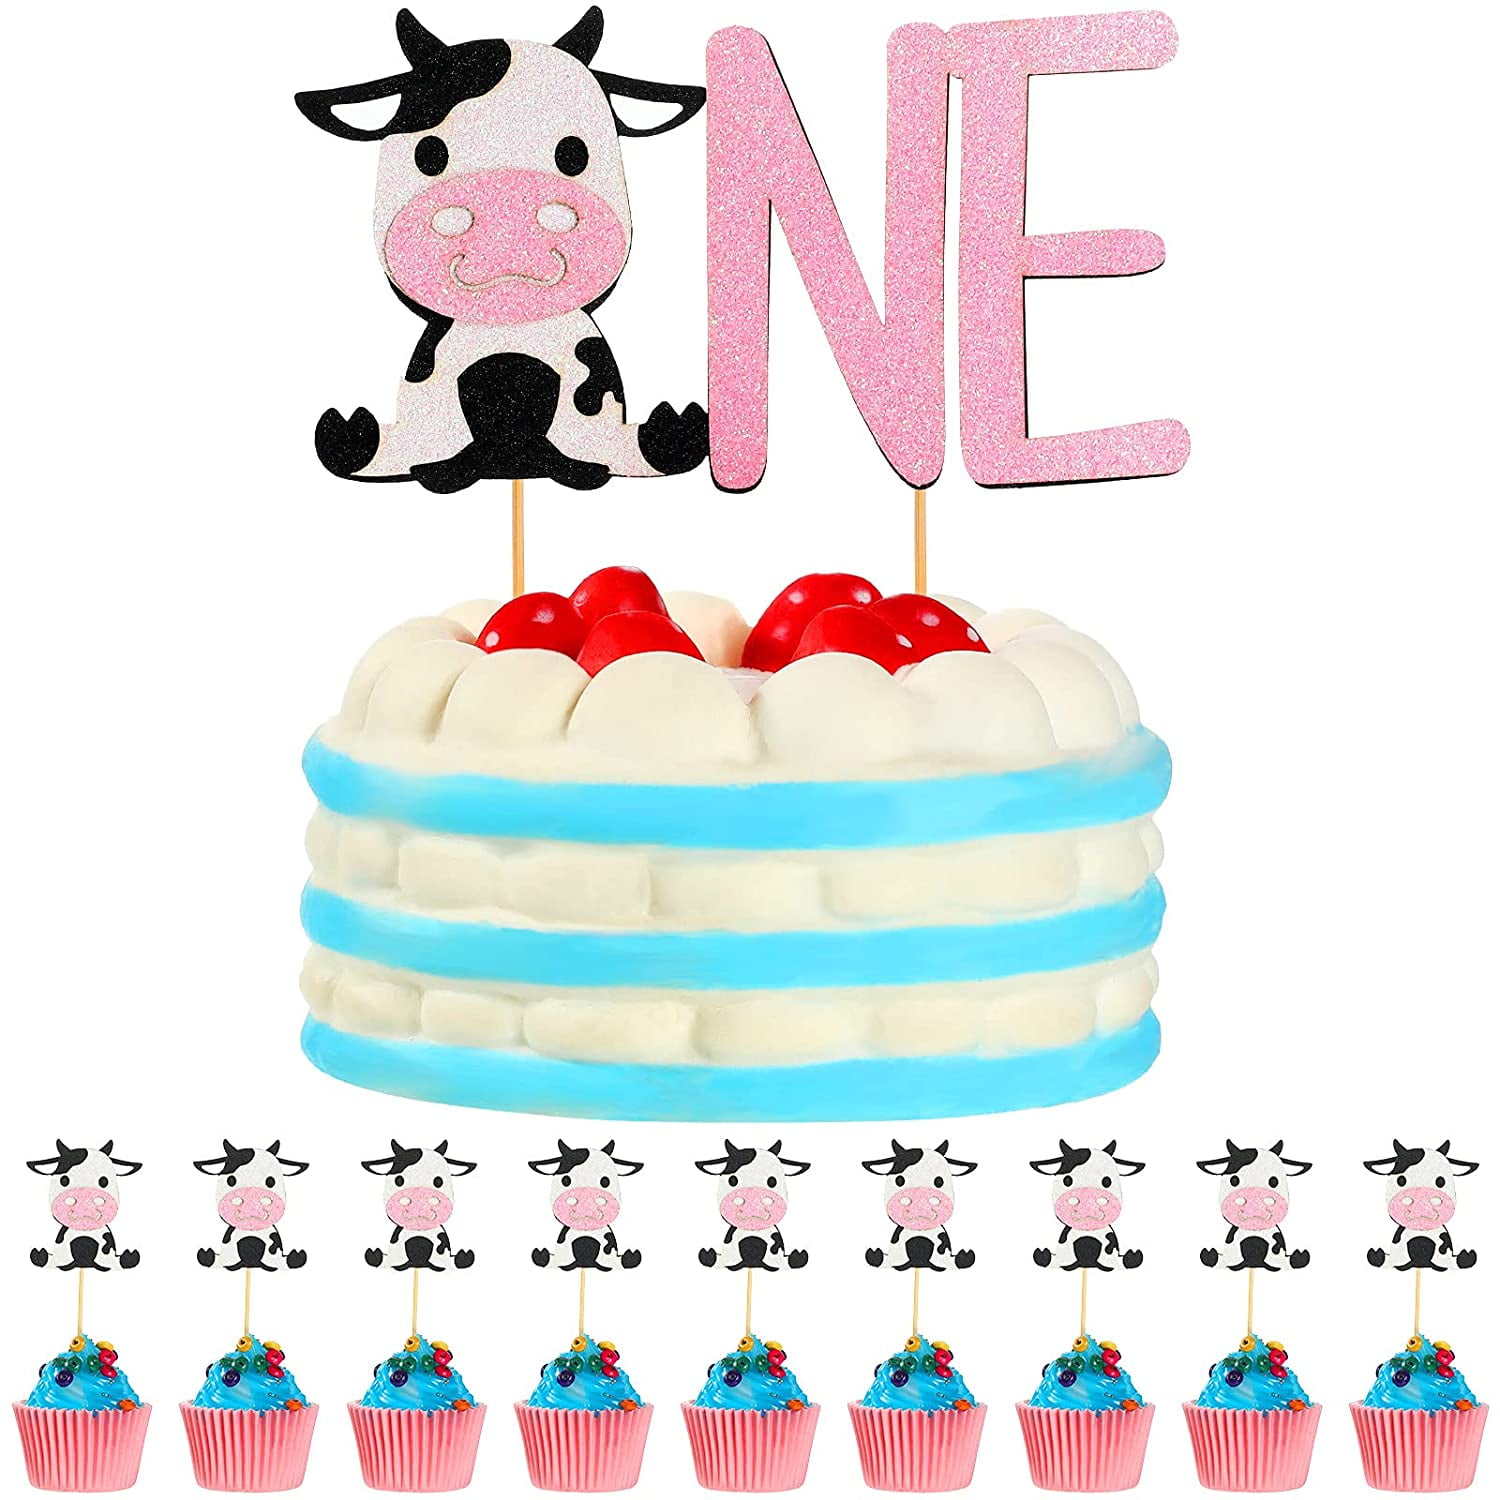 milk cow first birthday party cake| Alibaba.com